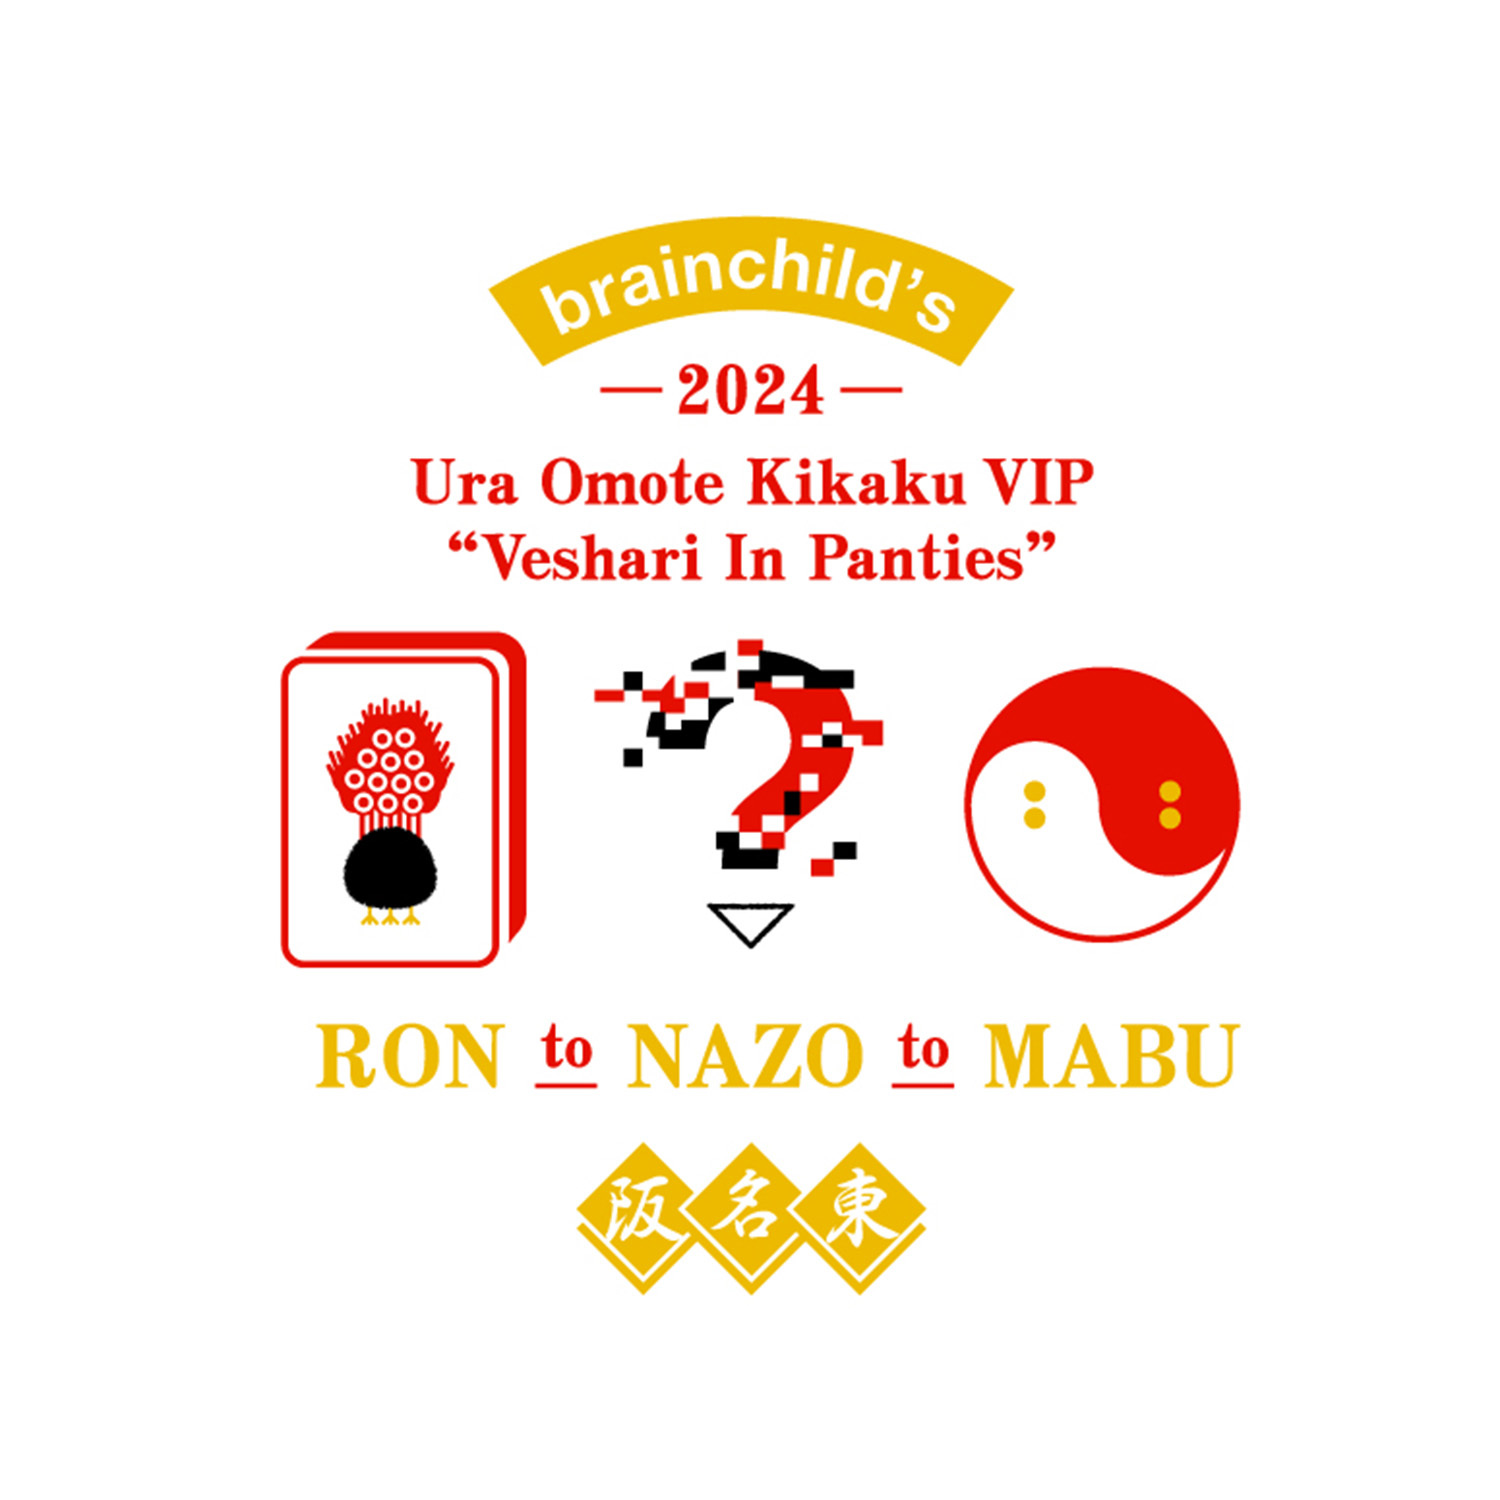 brainchild’s 2024 Ura Omote Kikaku VIP “Veshari In Panties” RON to NAZO to MABU